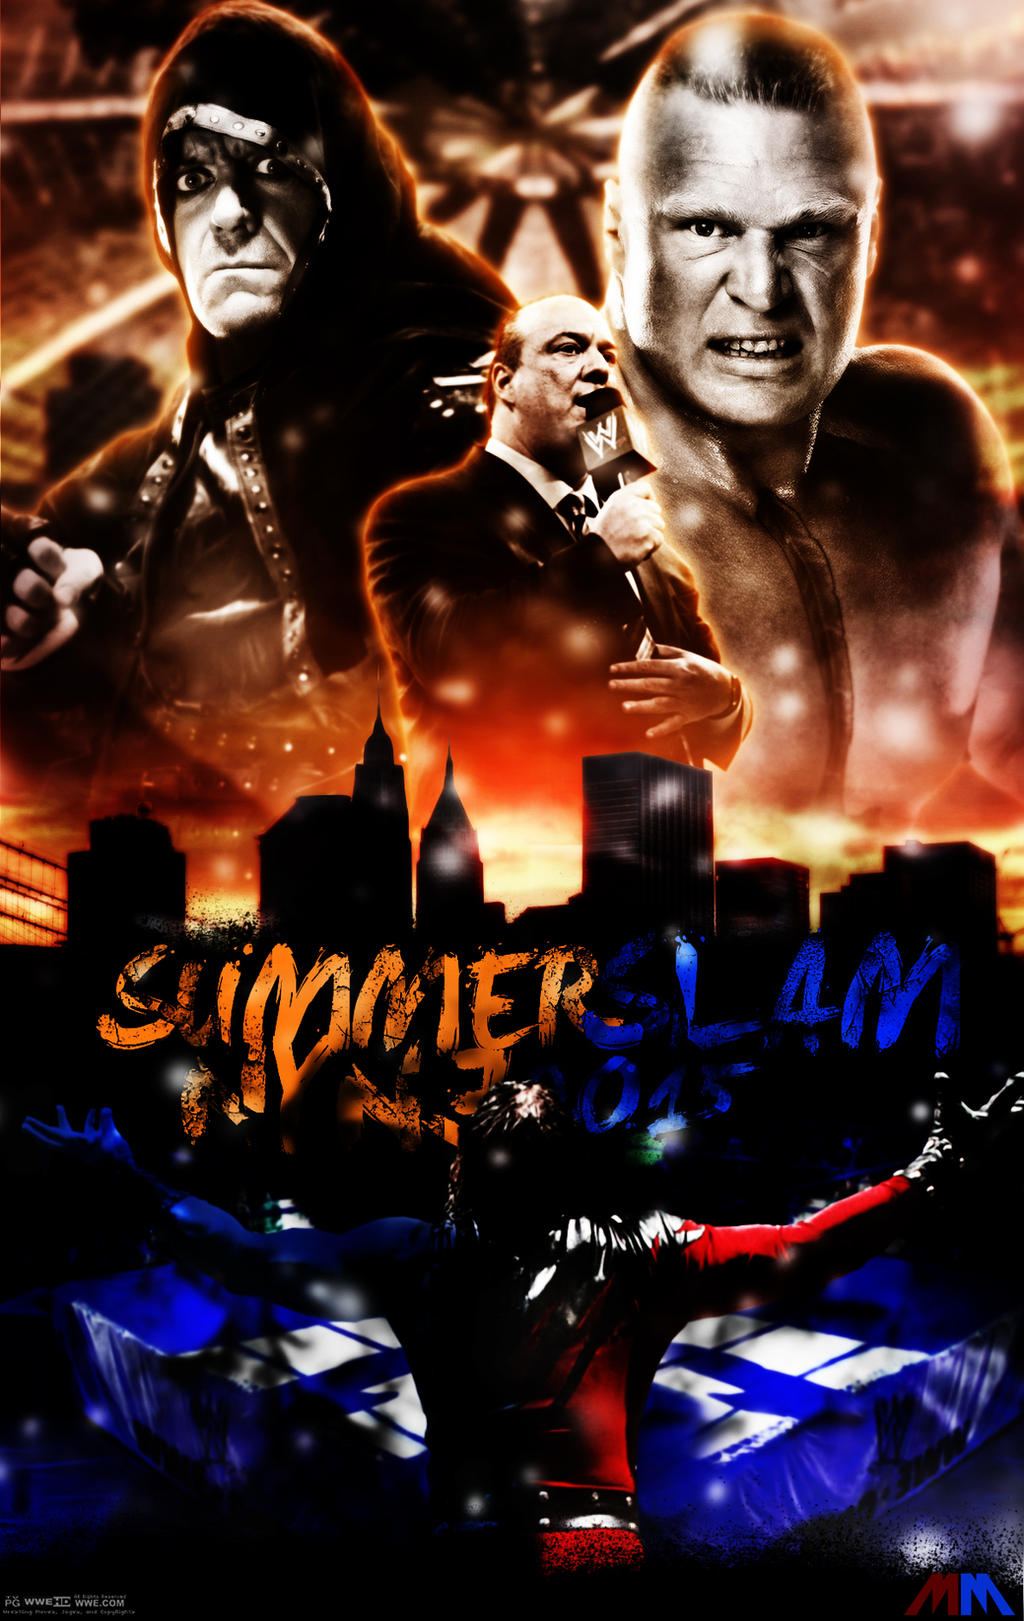 Image result for summer slam 2015 poster